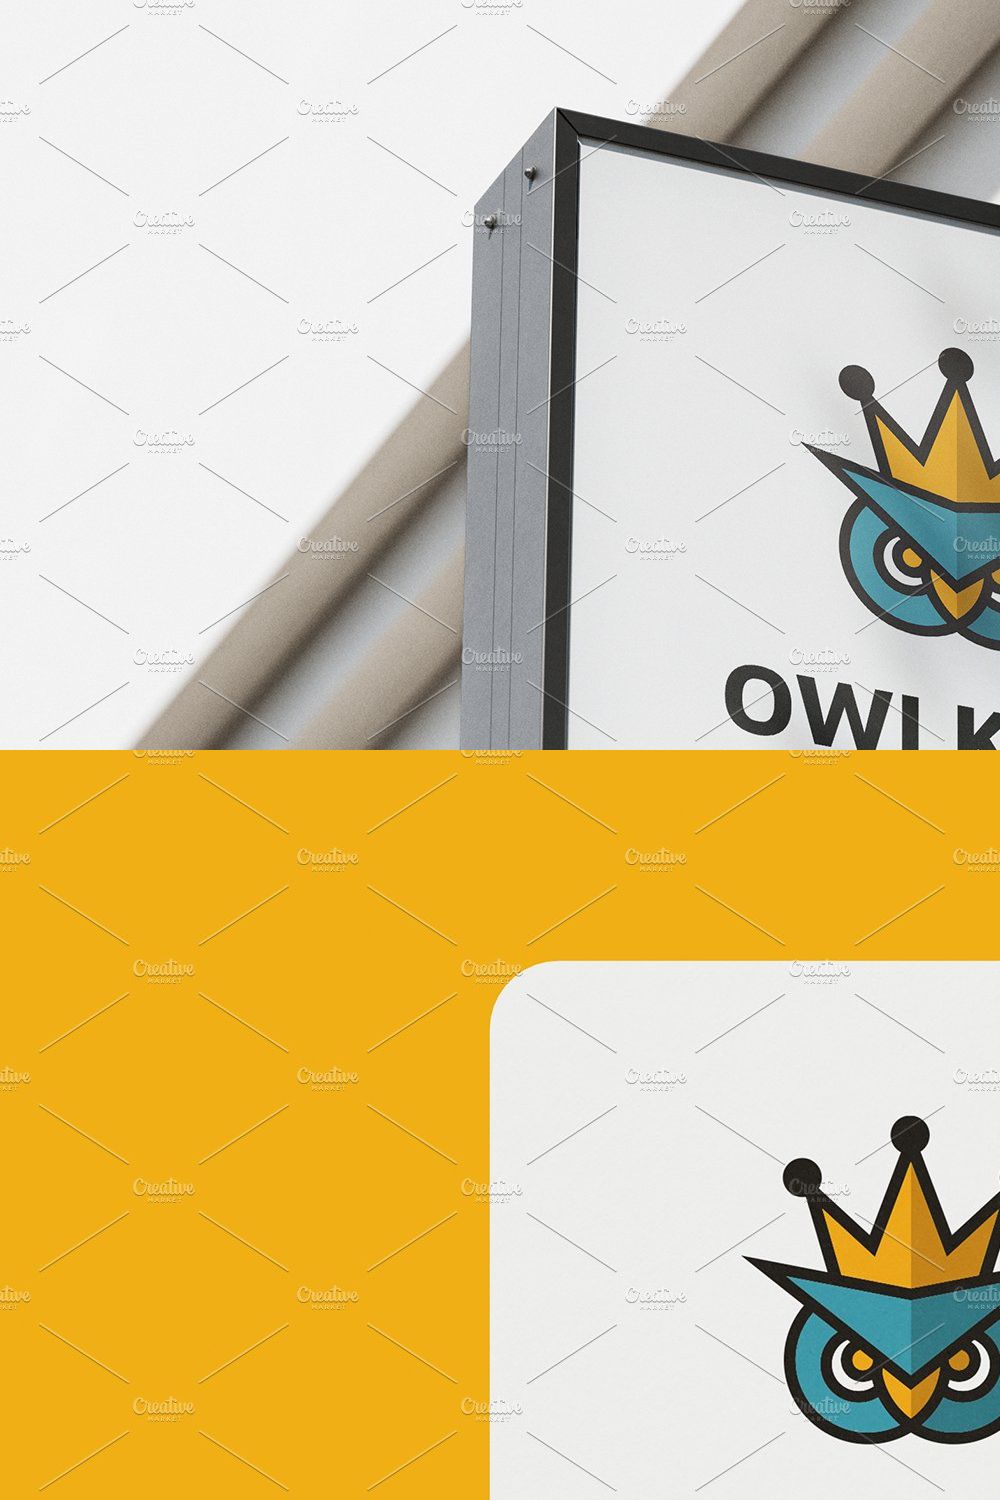 Owl King Logo pinterest preview image.